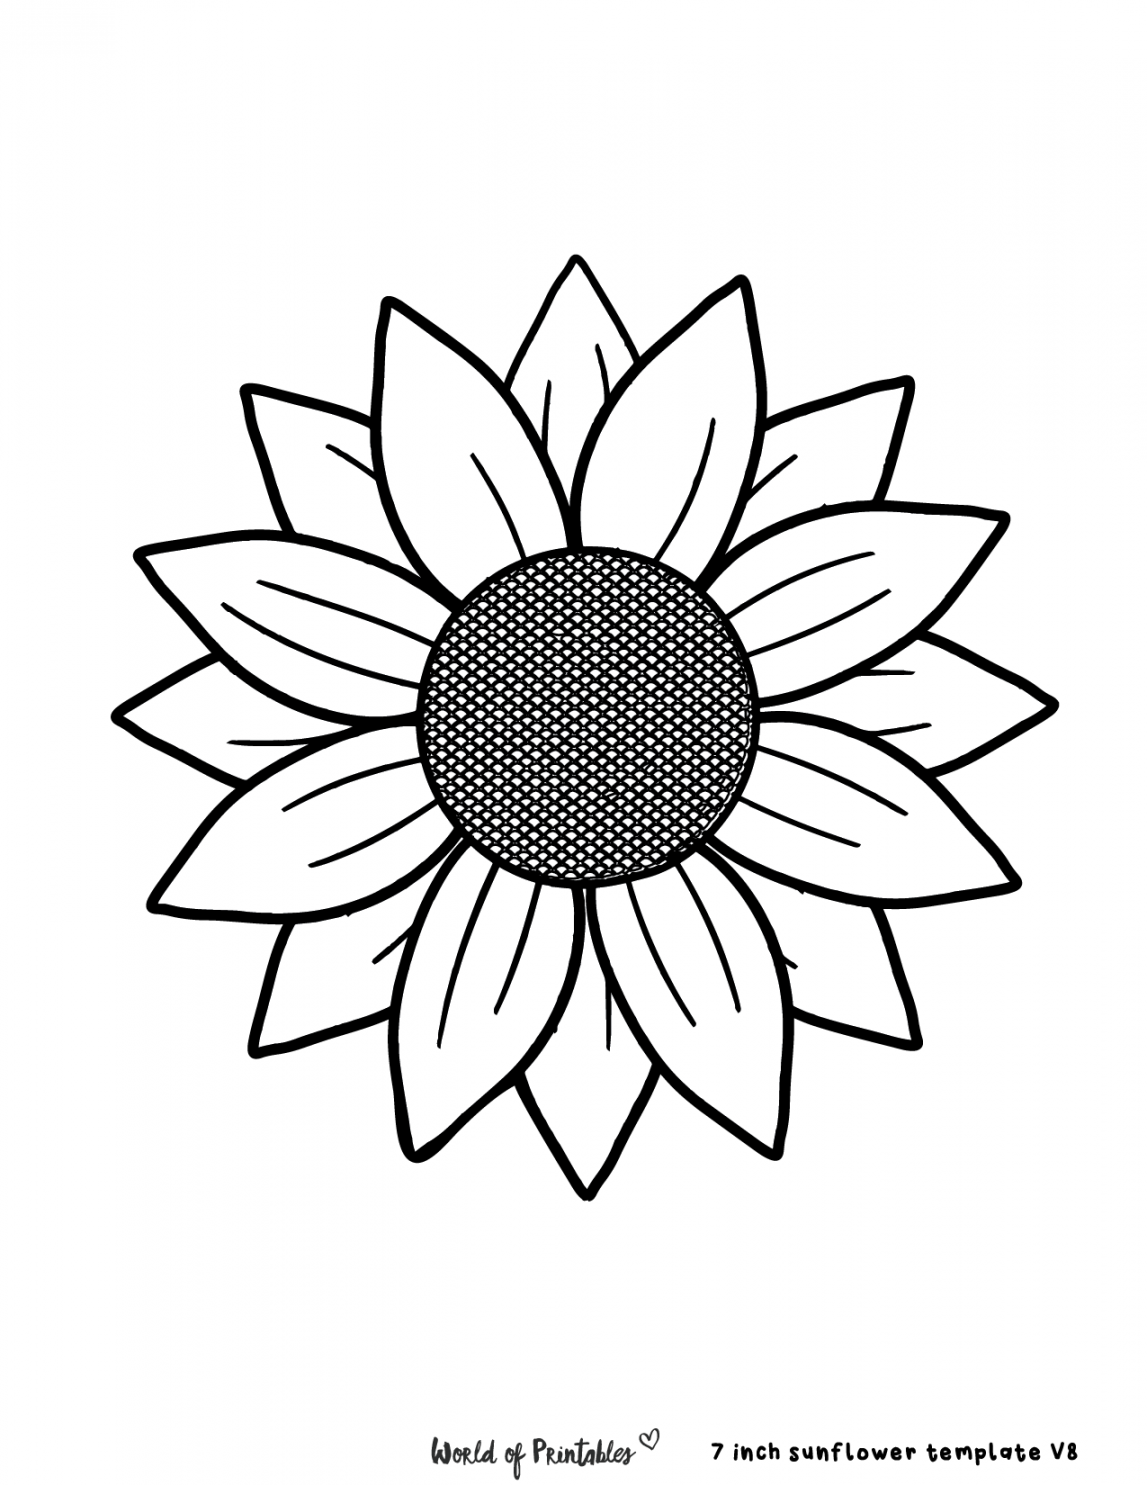 Best Sunflower Templates - World of Printables - FREE Printables - Sunflower Stencil Template